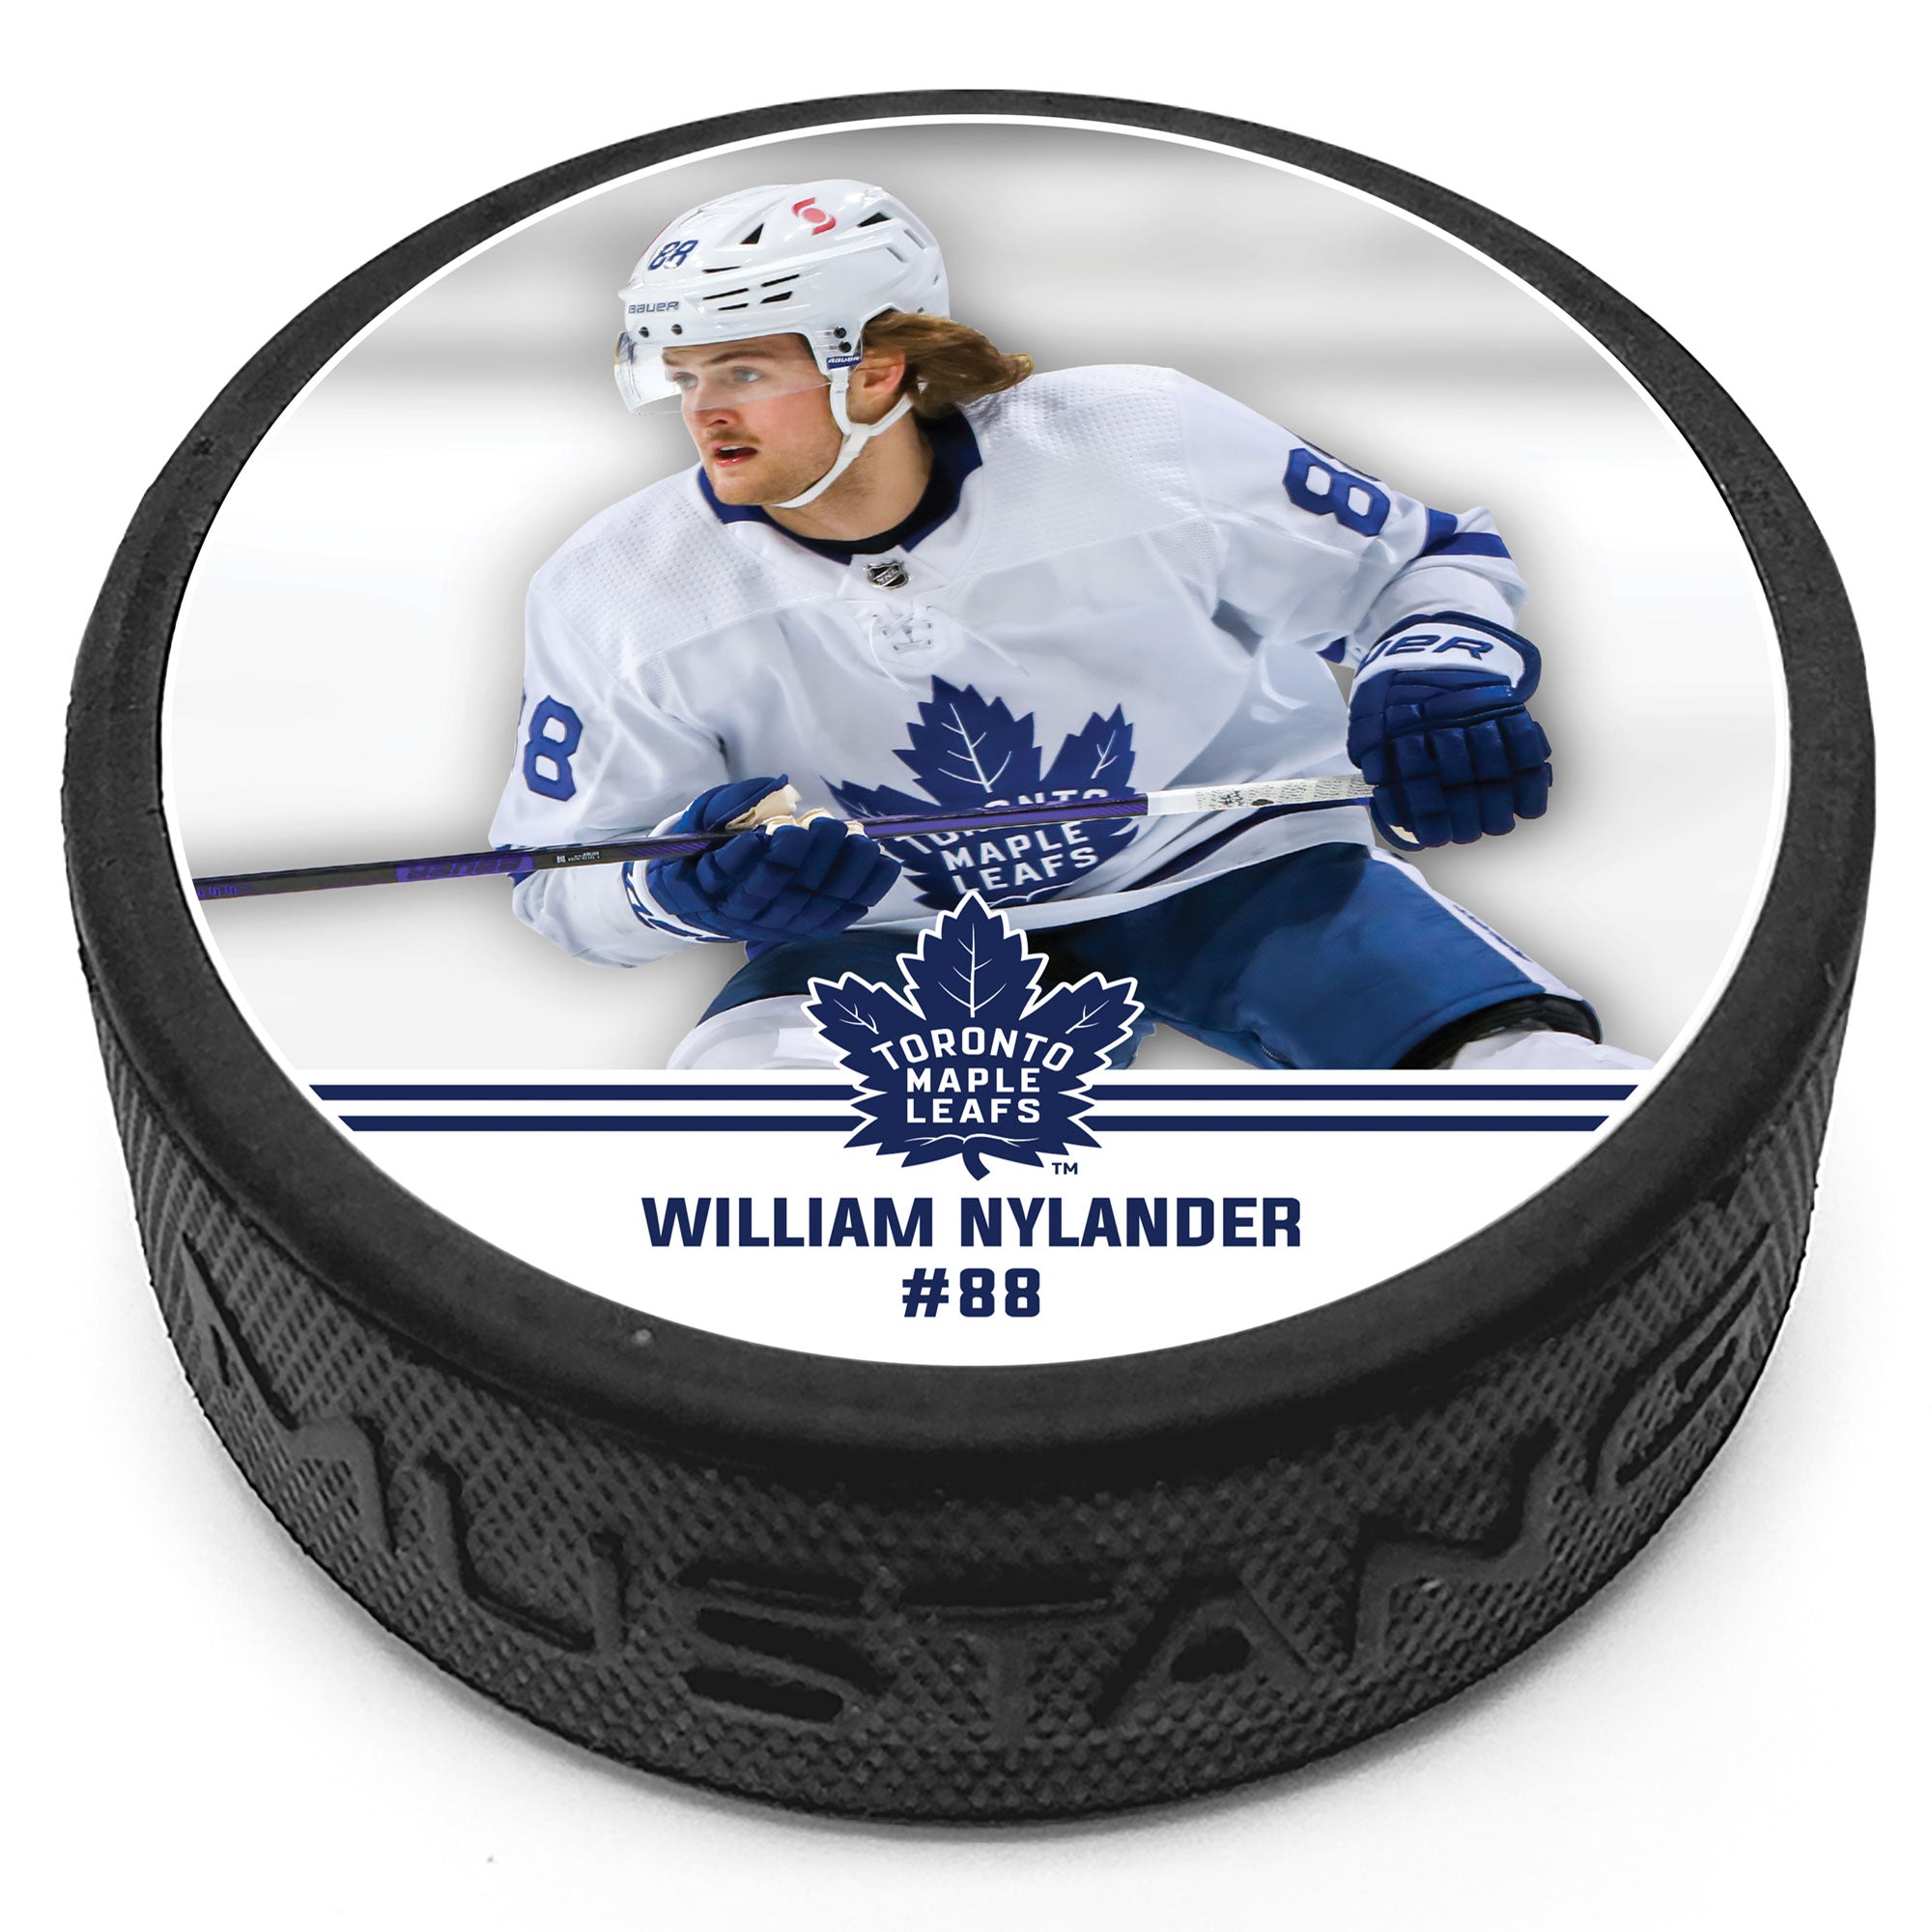 William Nylander NHL Memorabilia, William Nylander Collectibles